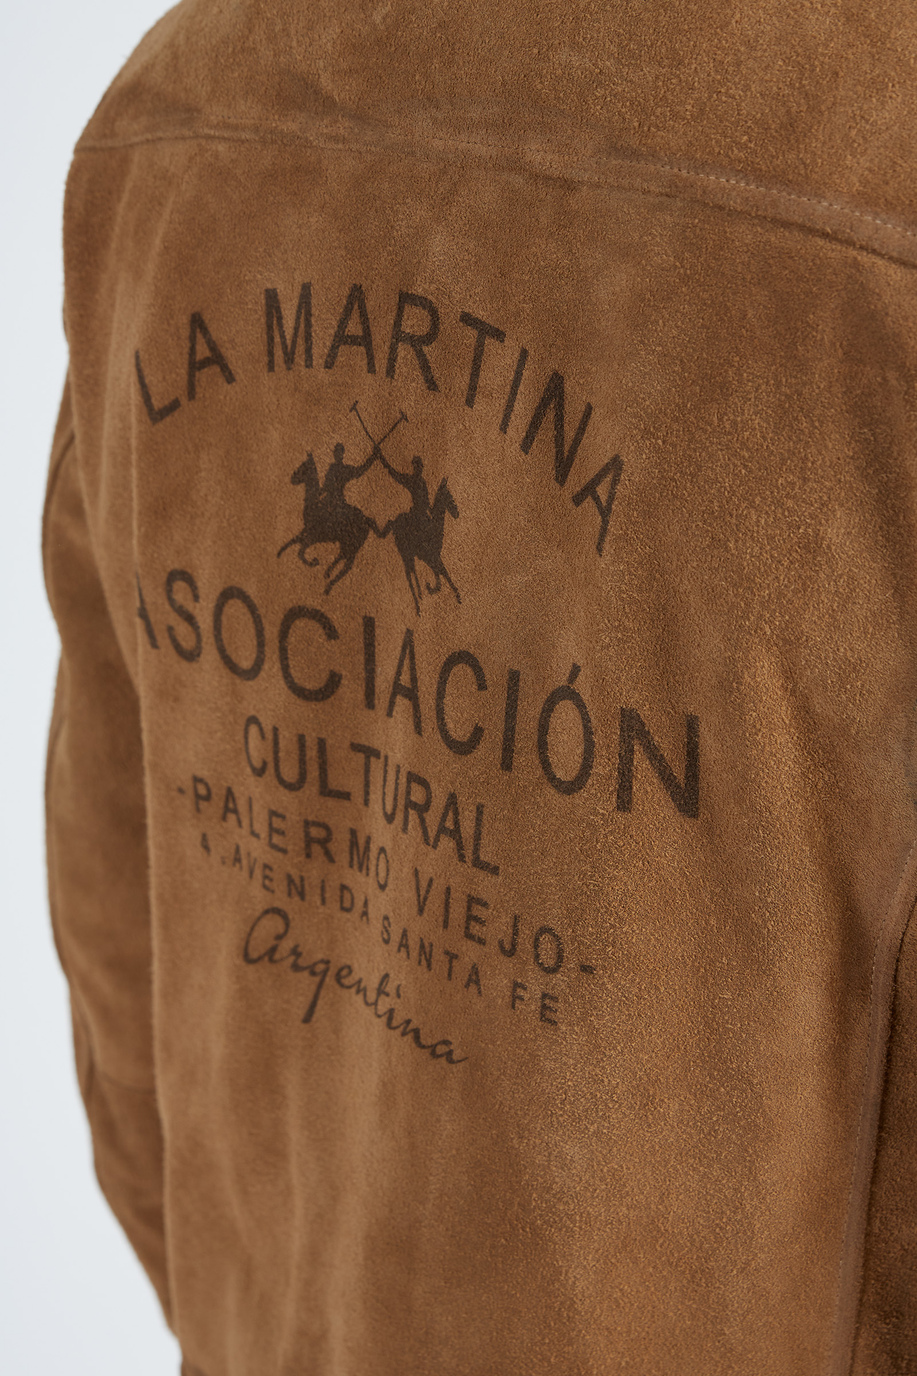 Men’s leather jacket with front regular fit zip closure - Winter looks for him | La Martina - Official Online Shop